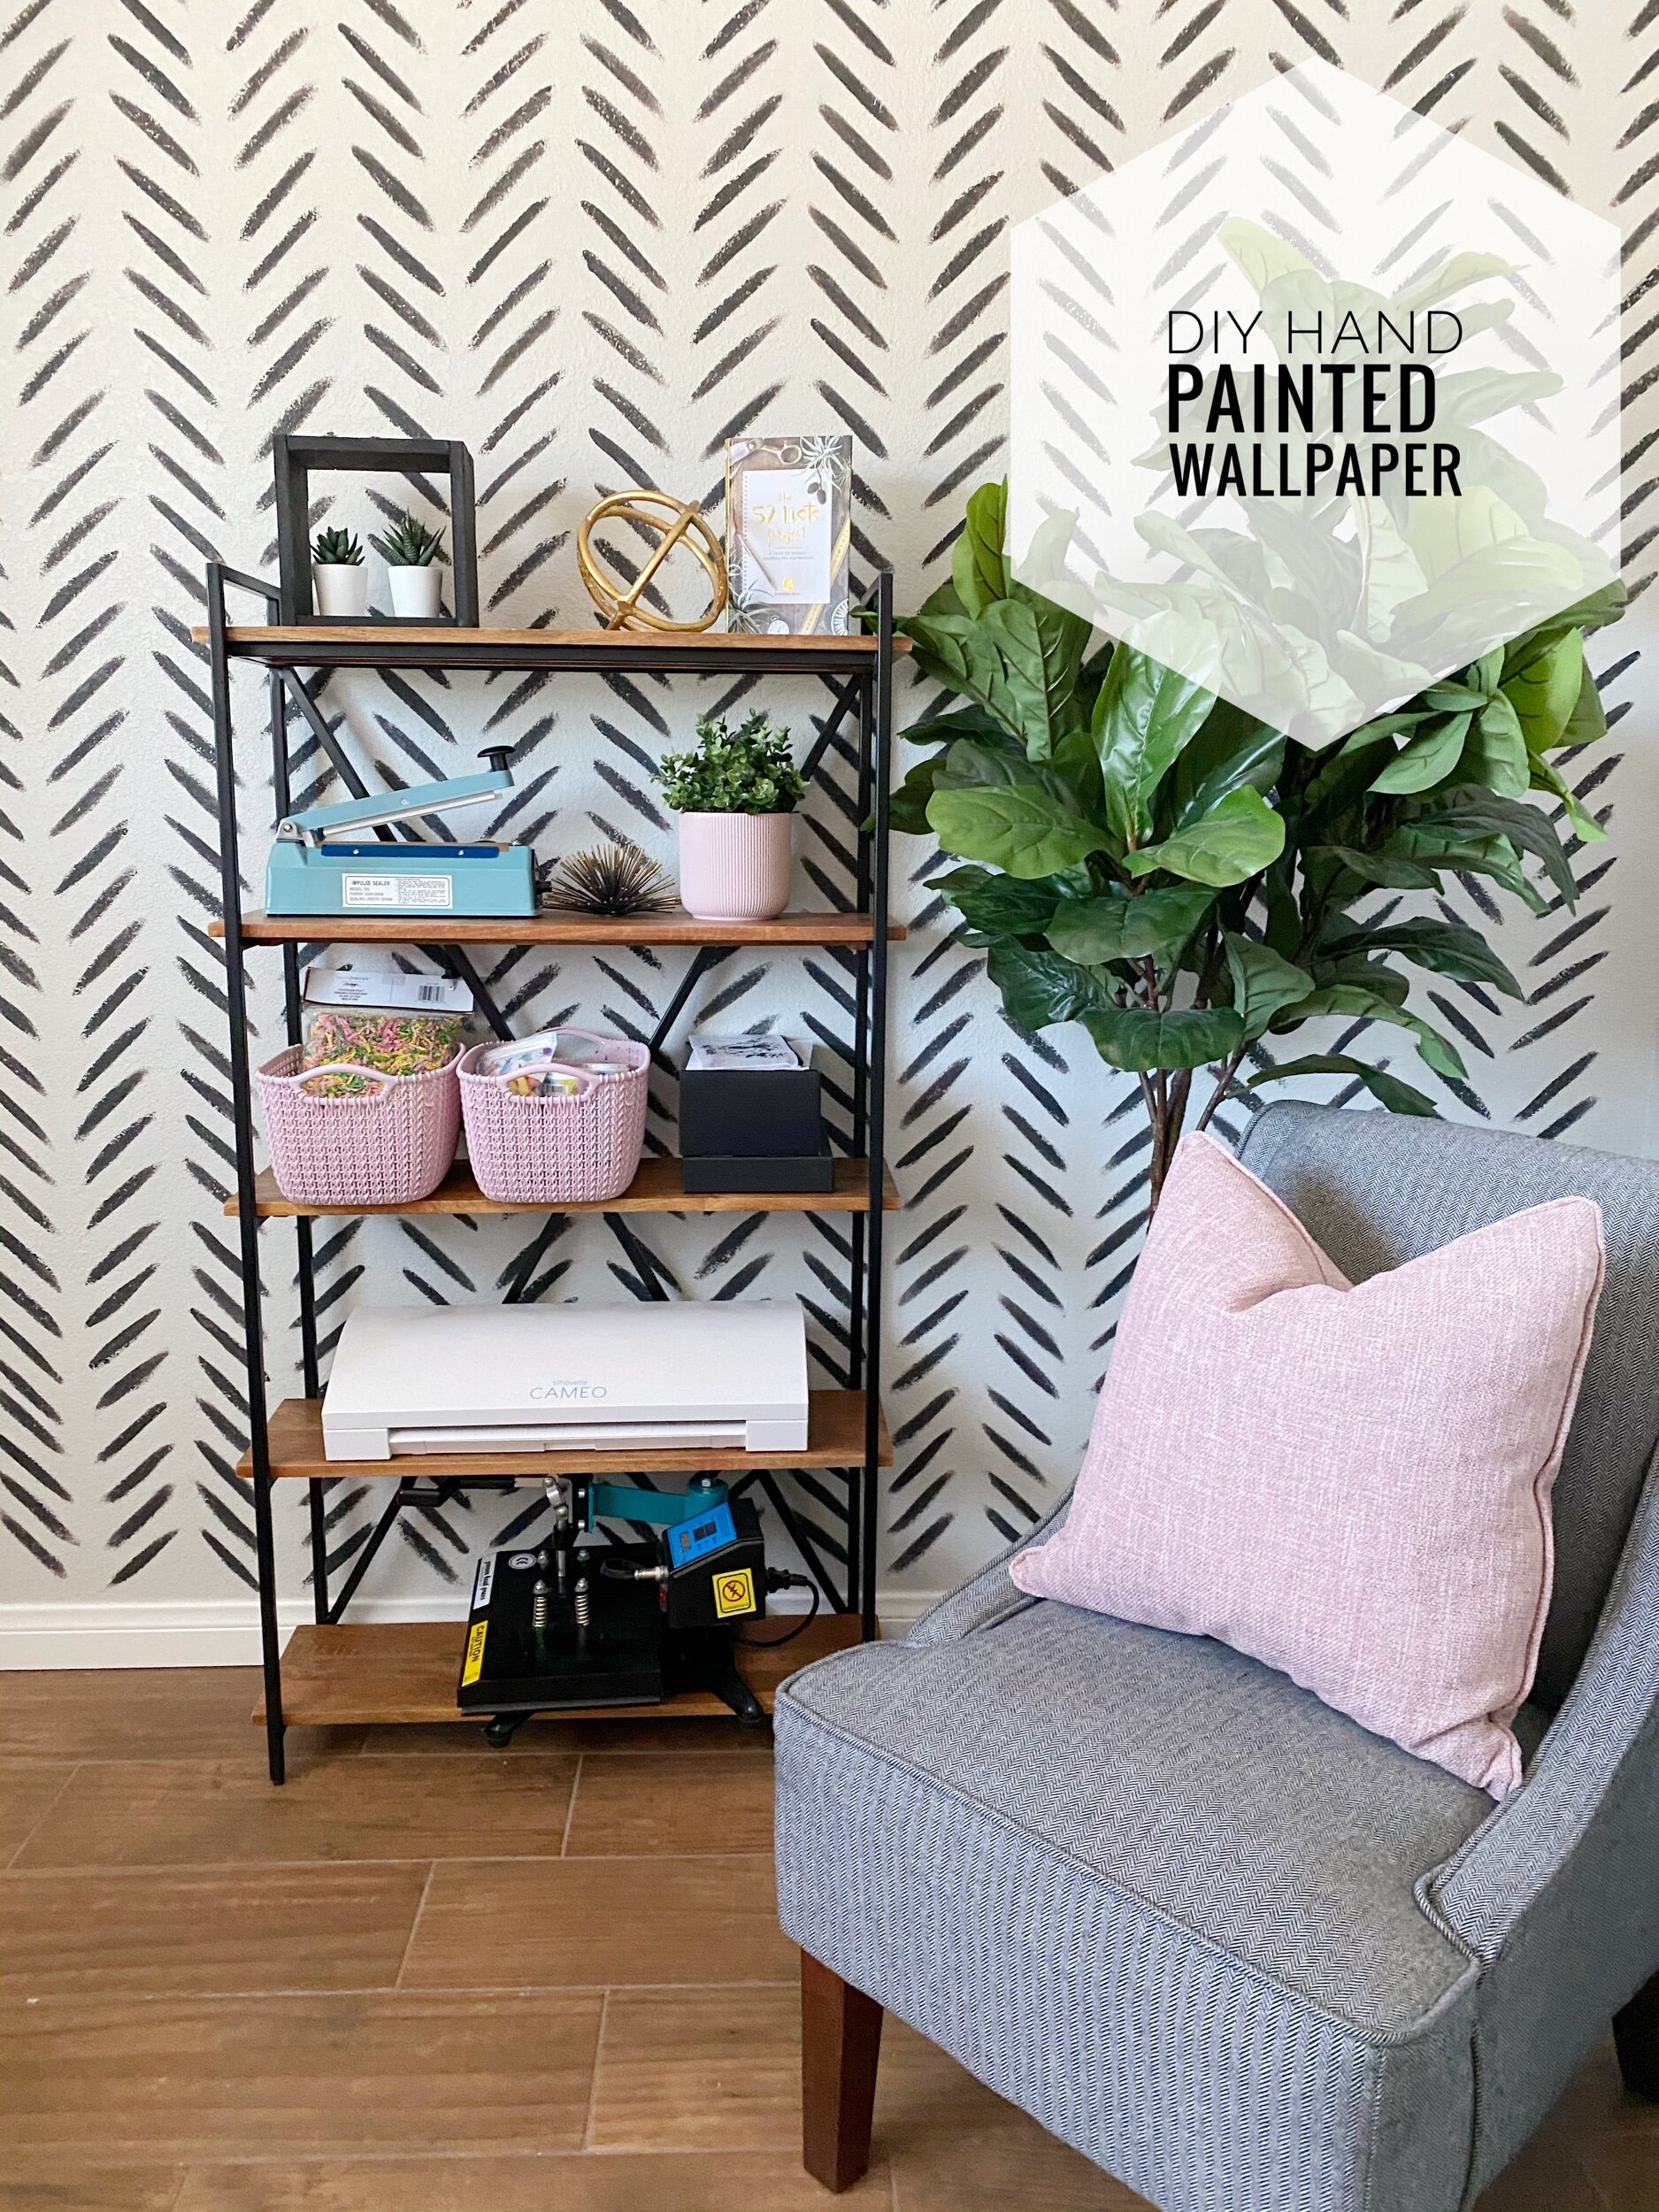 Low budget interior update, 3D wallpaper DIY — Hester's Handmade Home